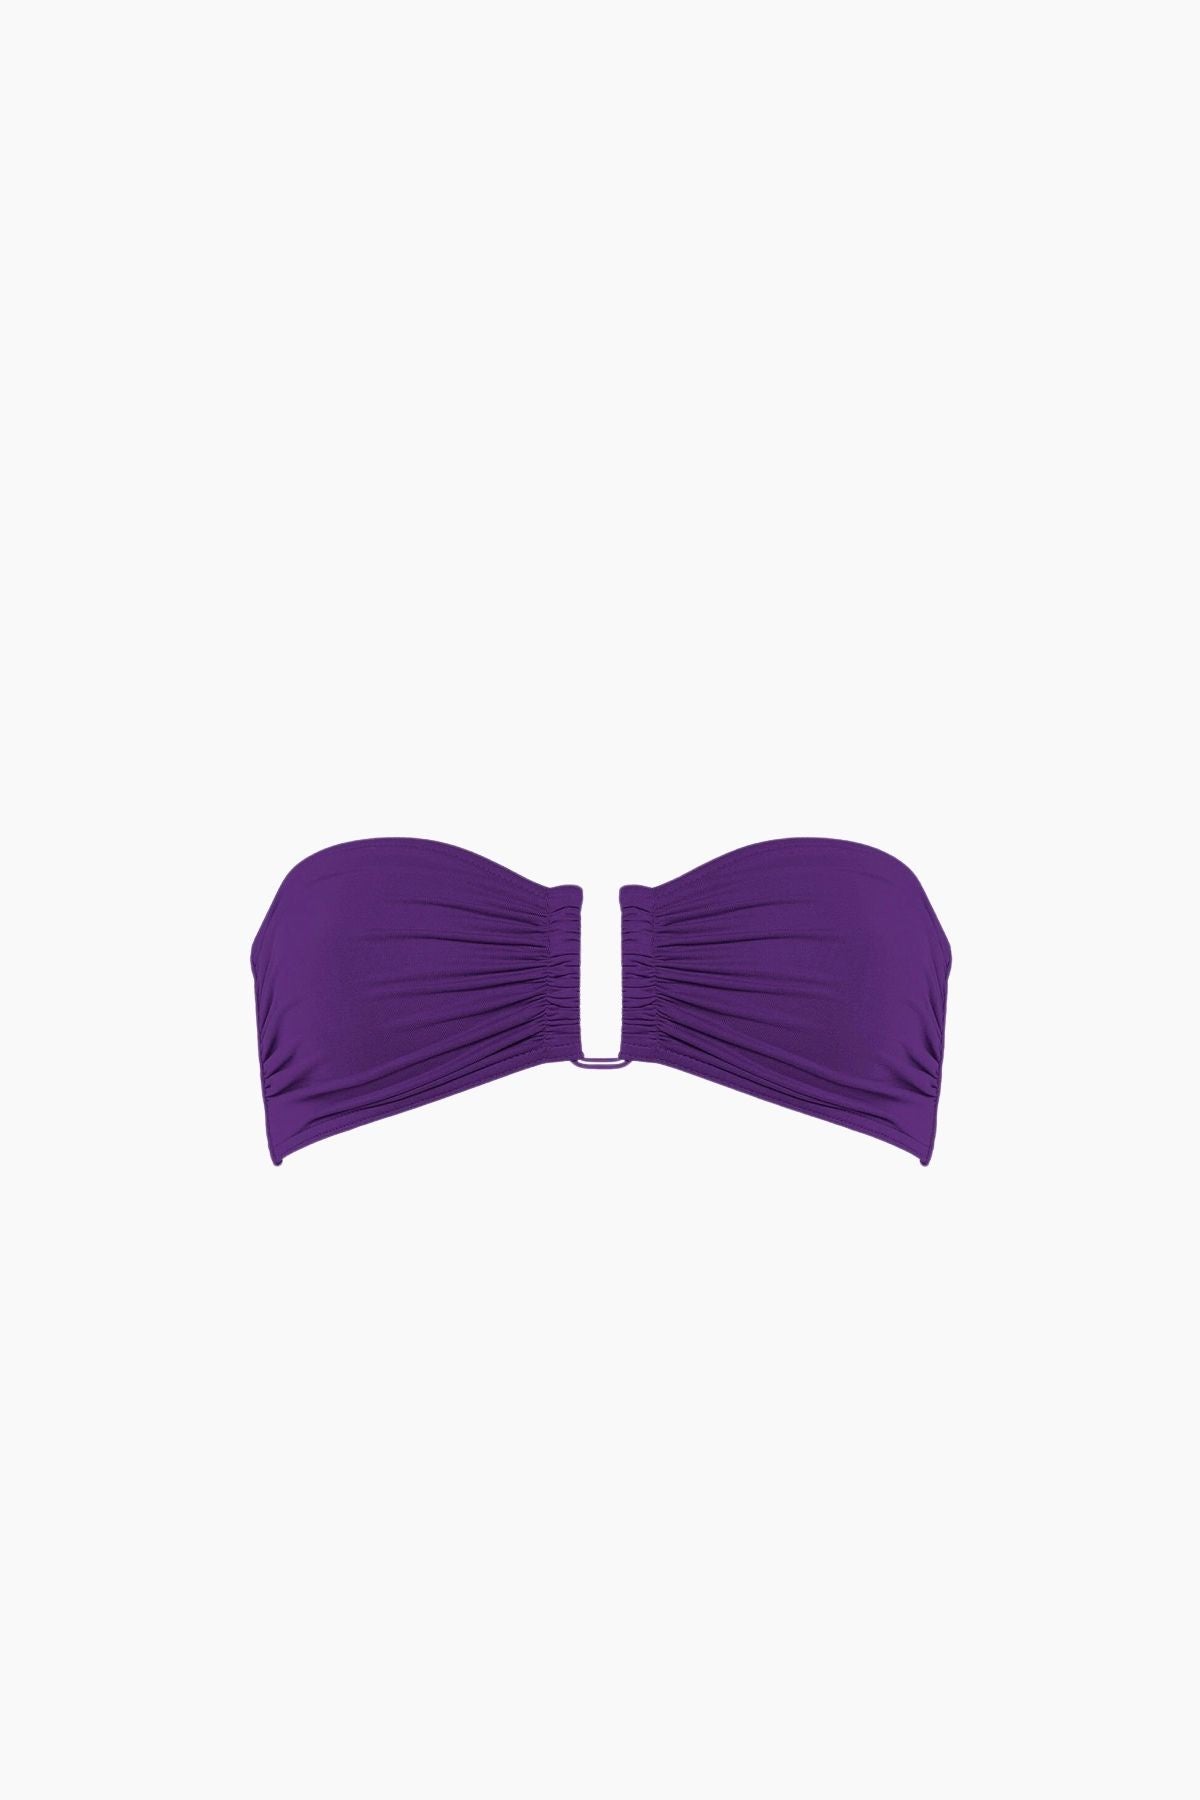 Eres Show Strapless Bikini Top - Inka Purple